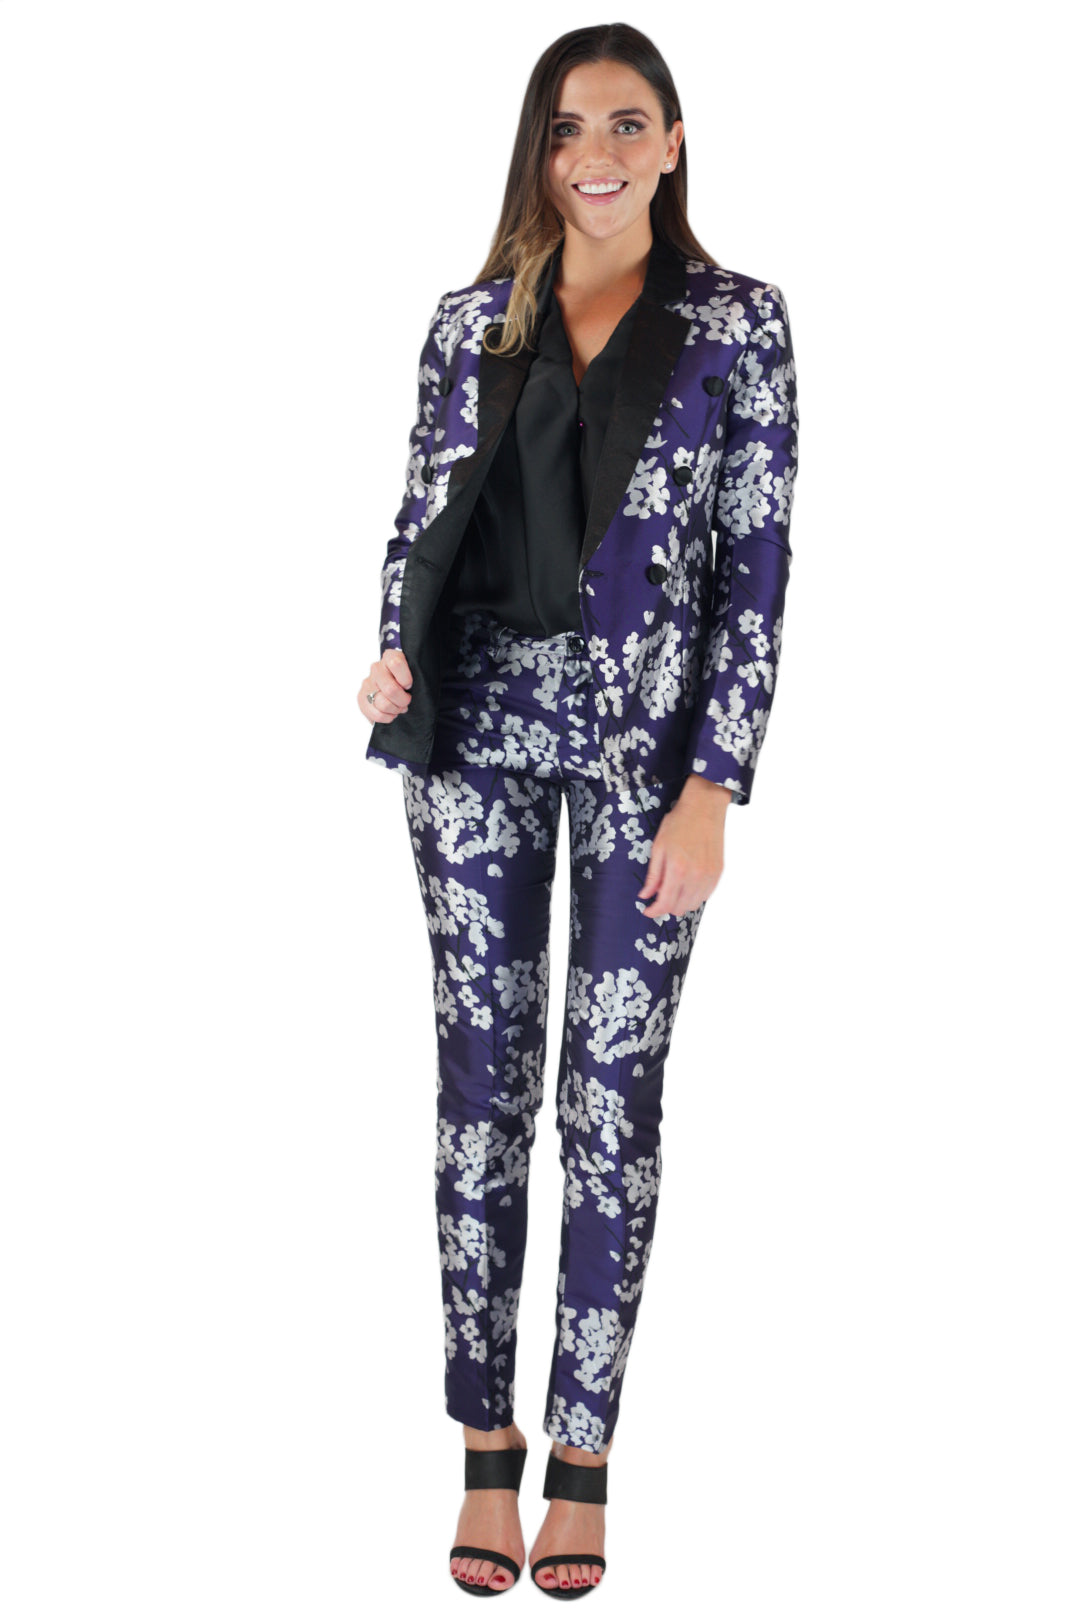 No Shrinking Violet Suit – 400 Co.